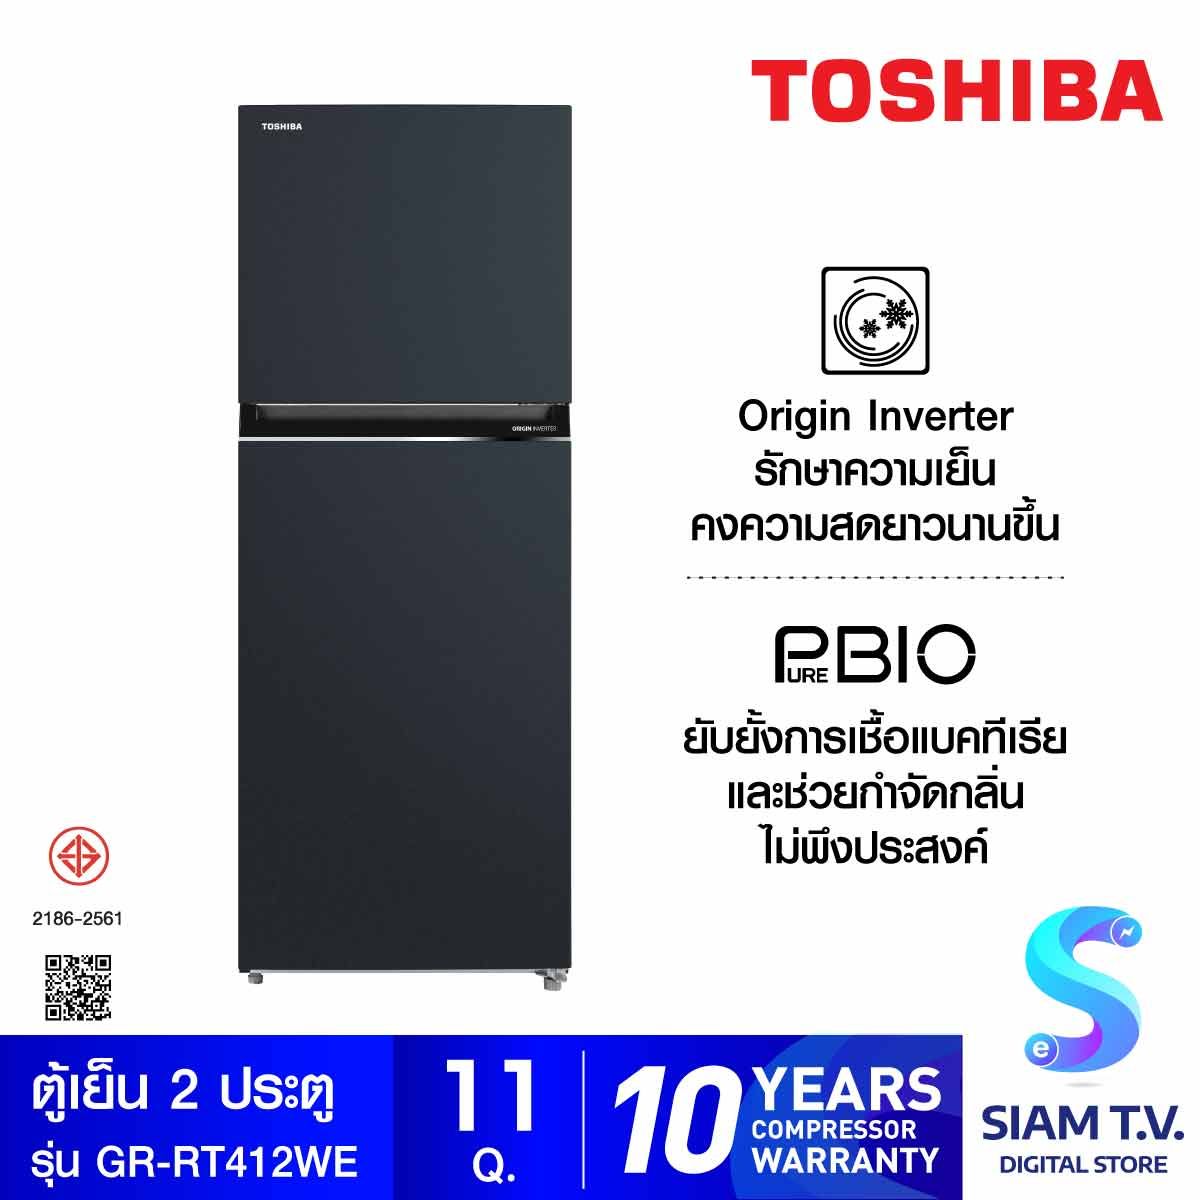 TOSHIBA ตู้เย็น 2 ประตู 11Q INVERTER สี เทาดำ รุ่น GR-RT412WE-PMT(52)